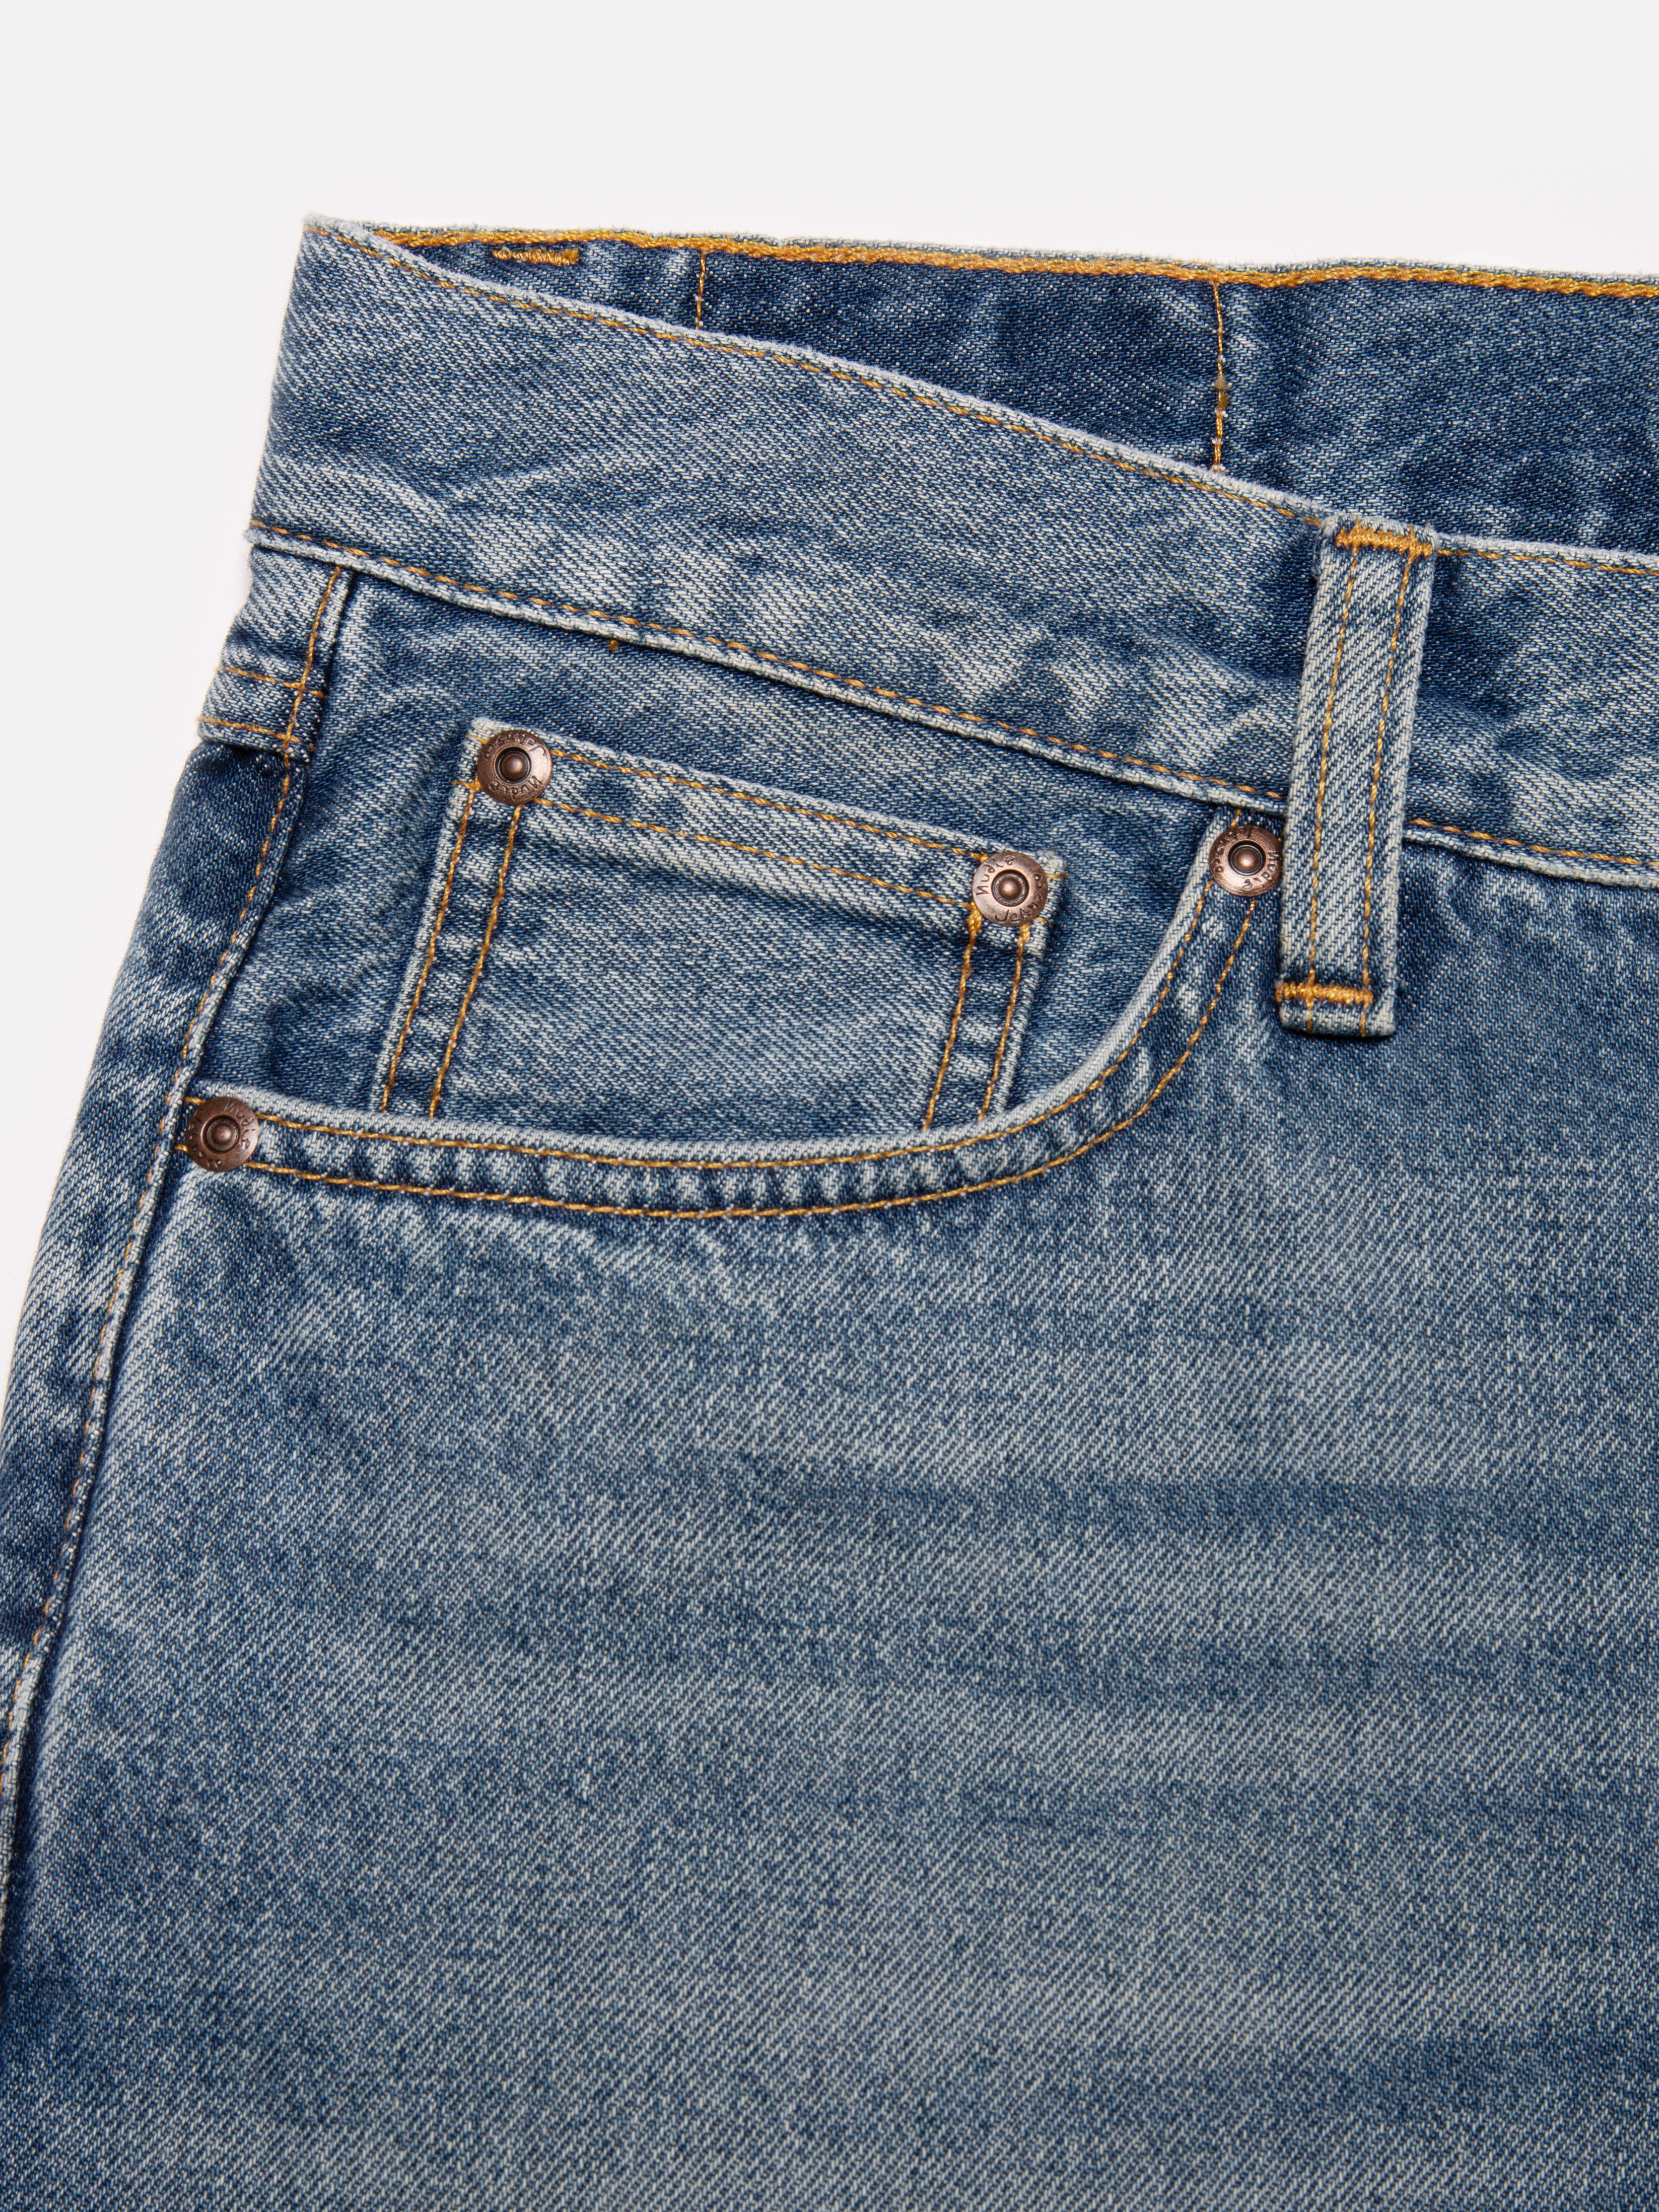 Jeans-Shorts Josh - Blue Haze